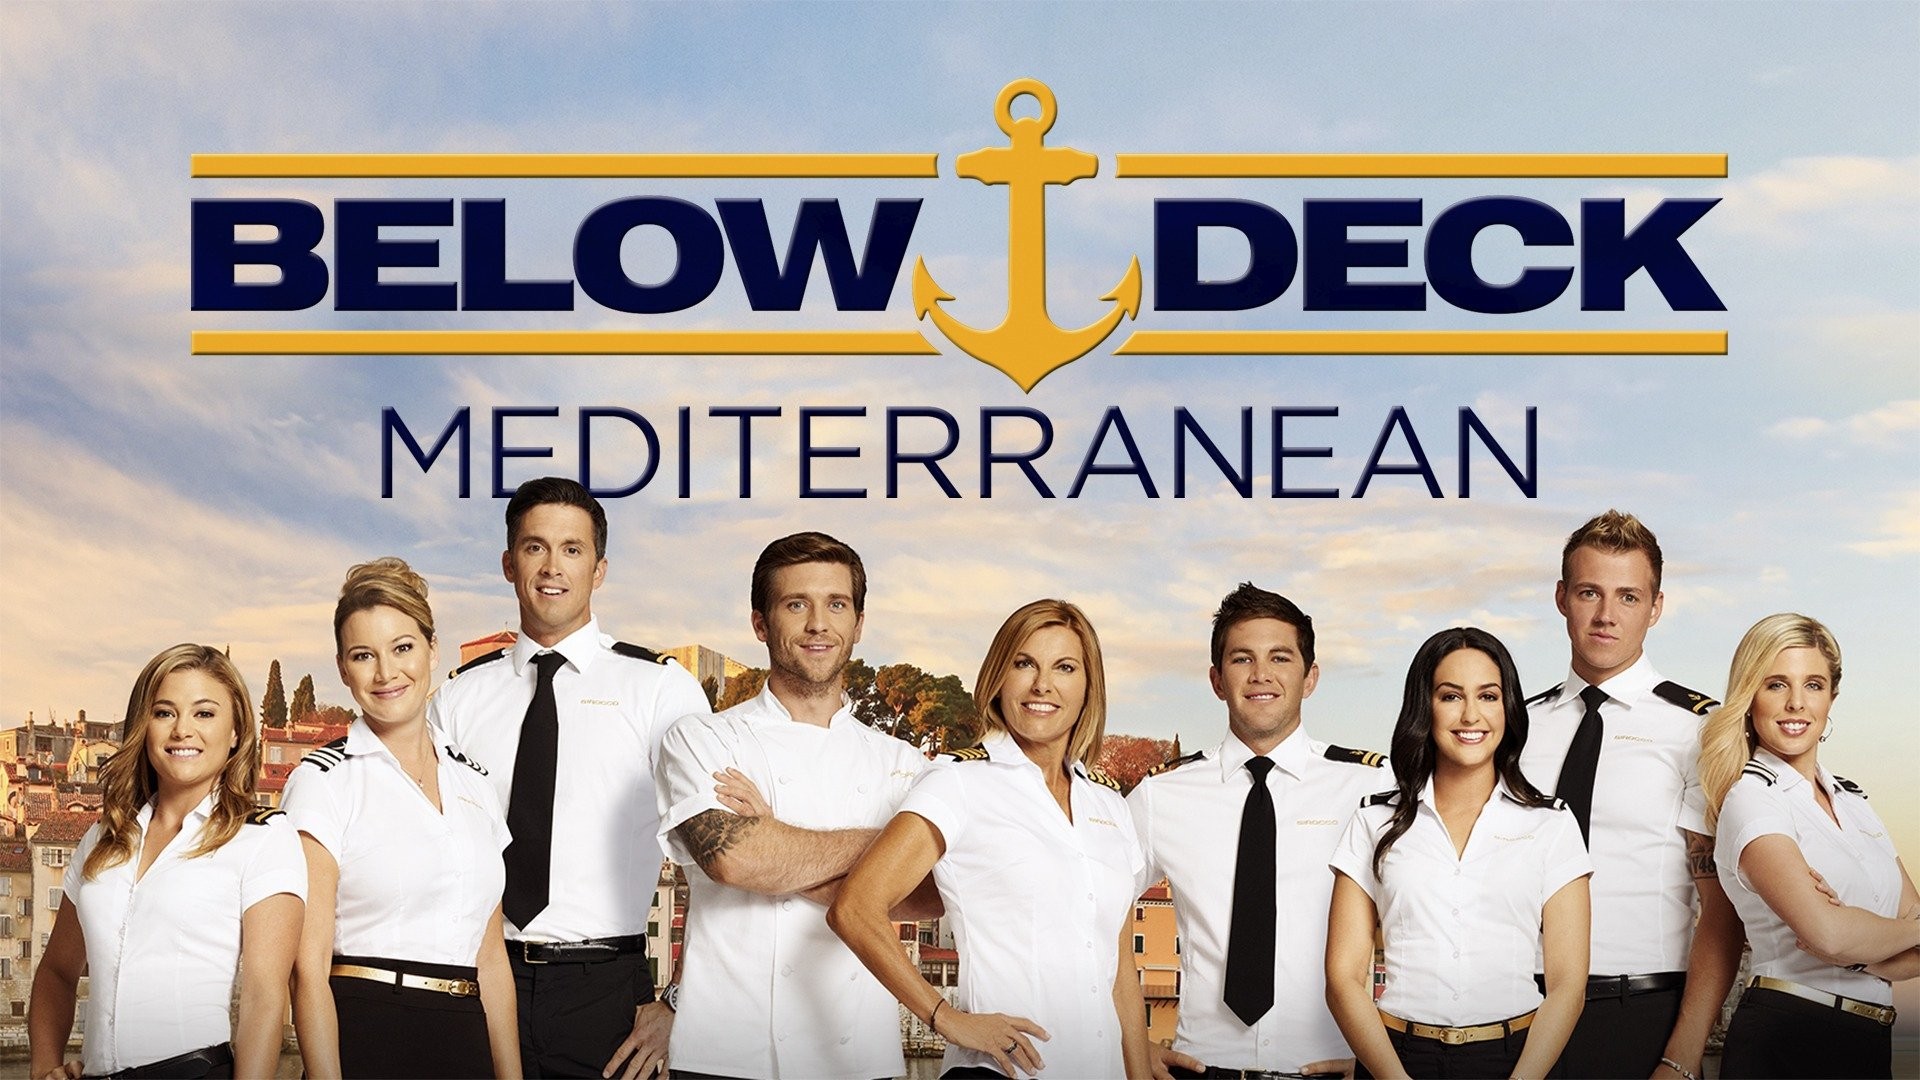 Below Deck Mediterranean - Rotten Tomatoes